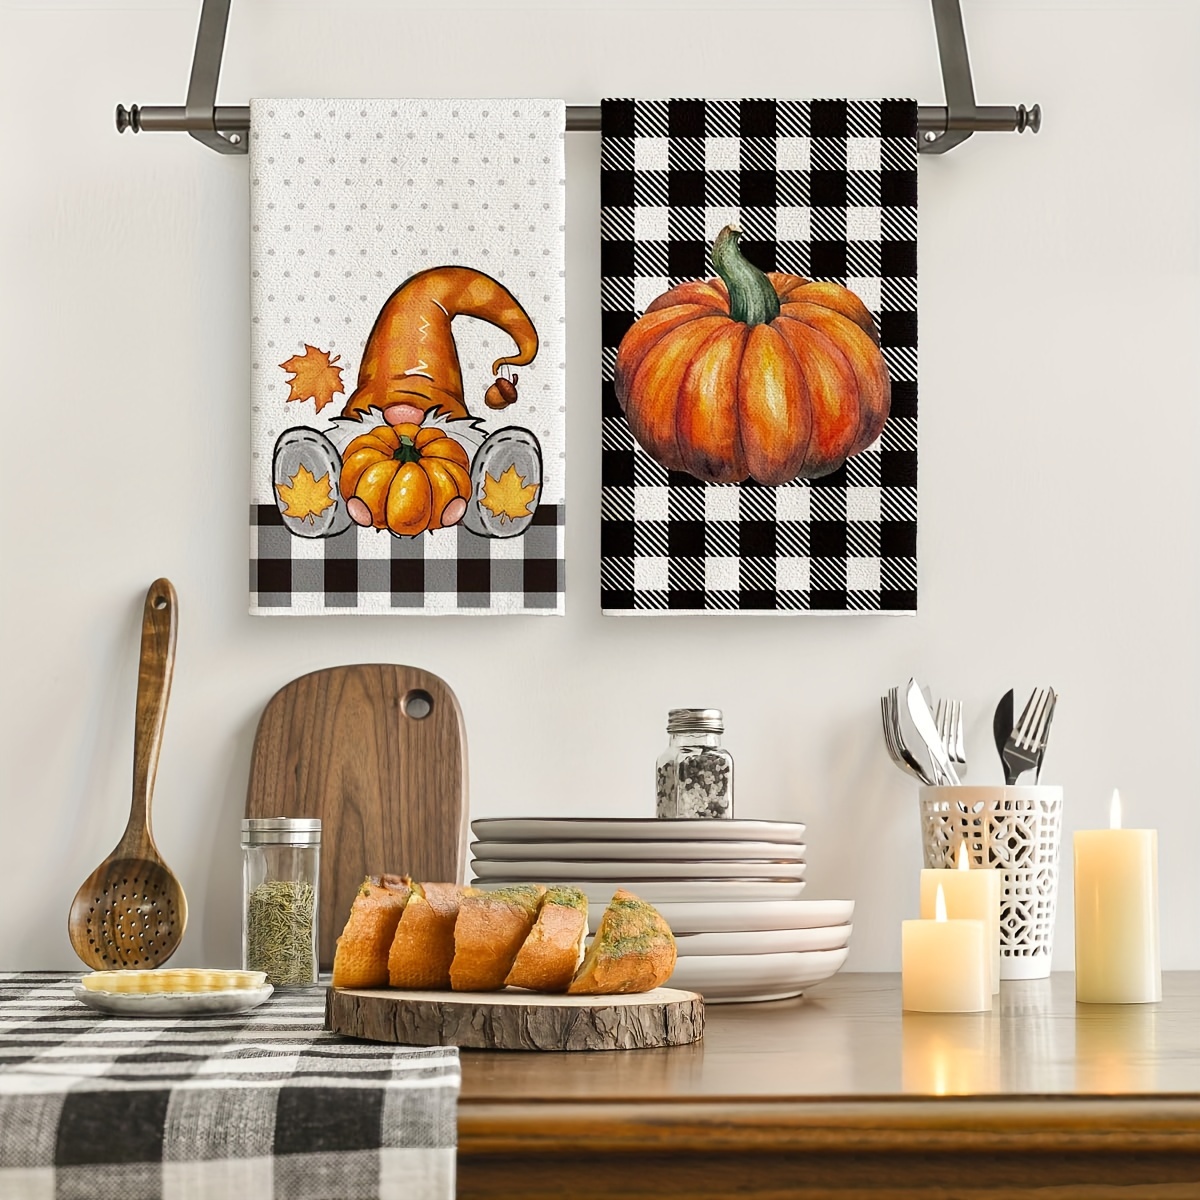 Set of 2 Plaid Pumpkin Bathroom Hand Towels with Autumn Motif 